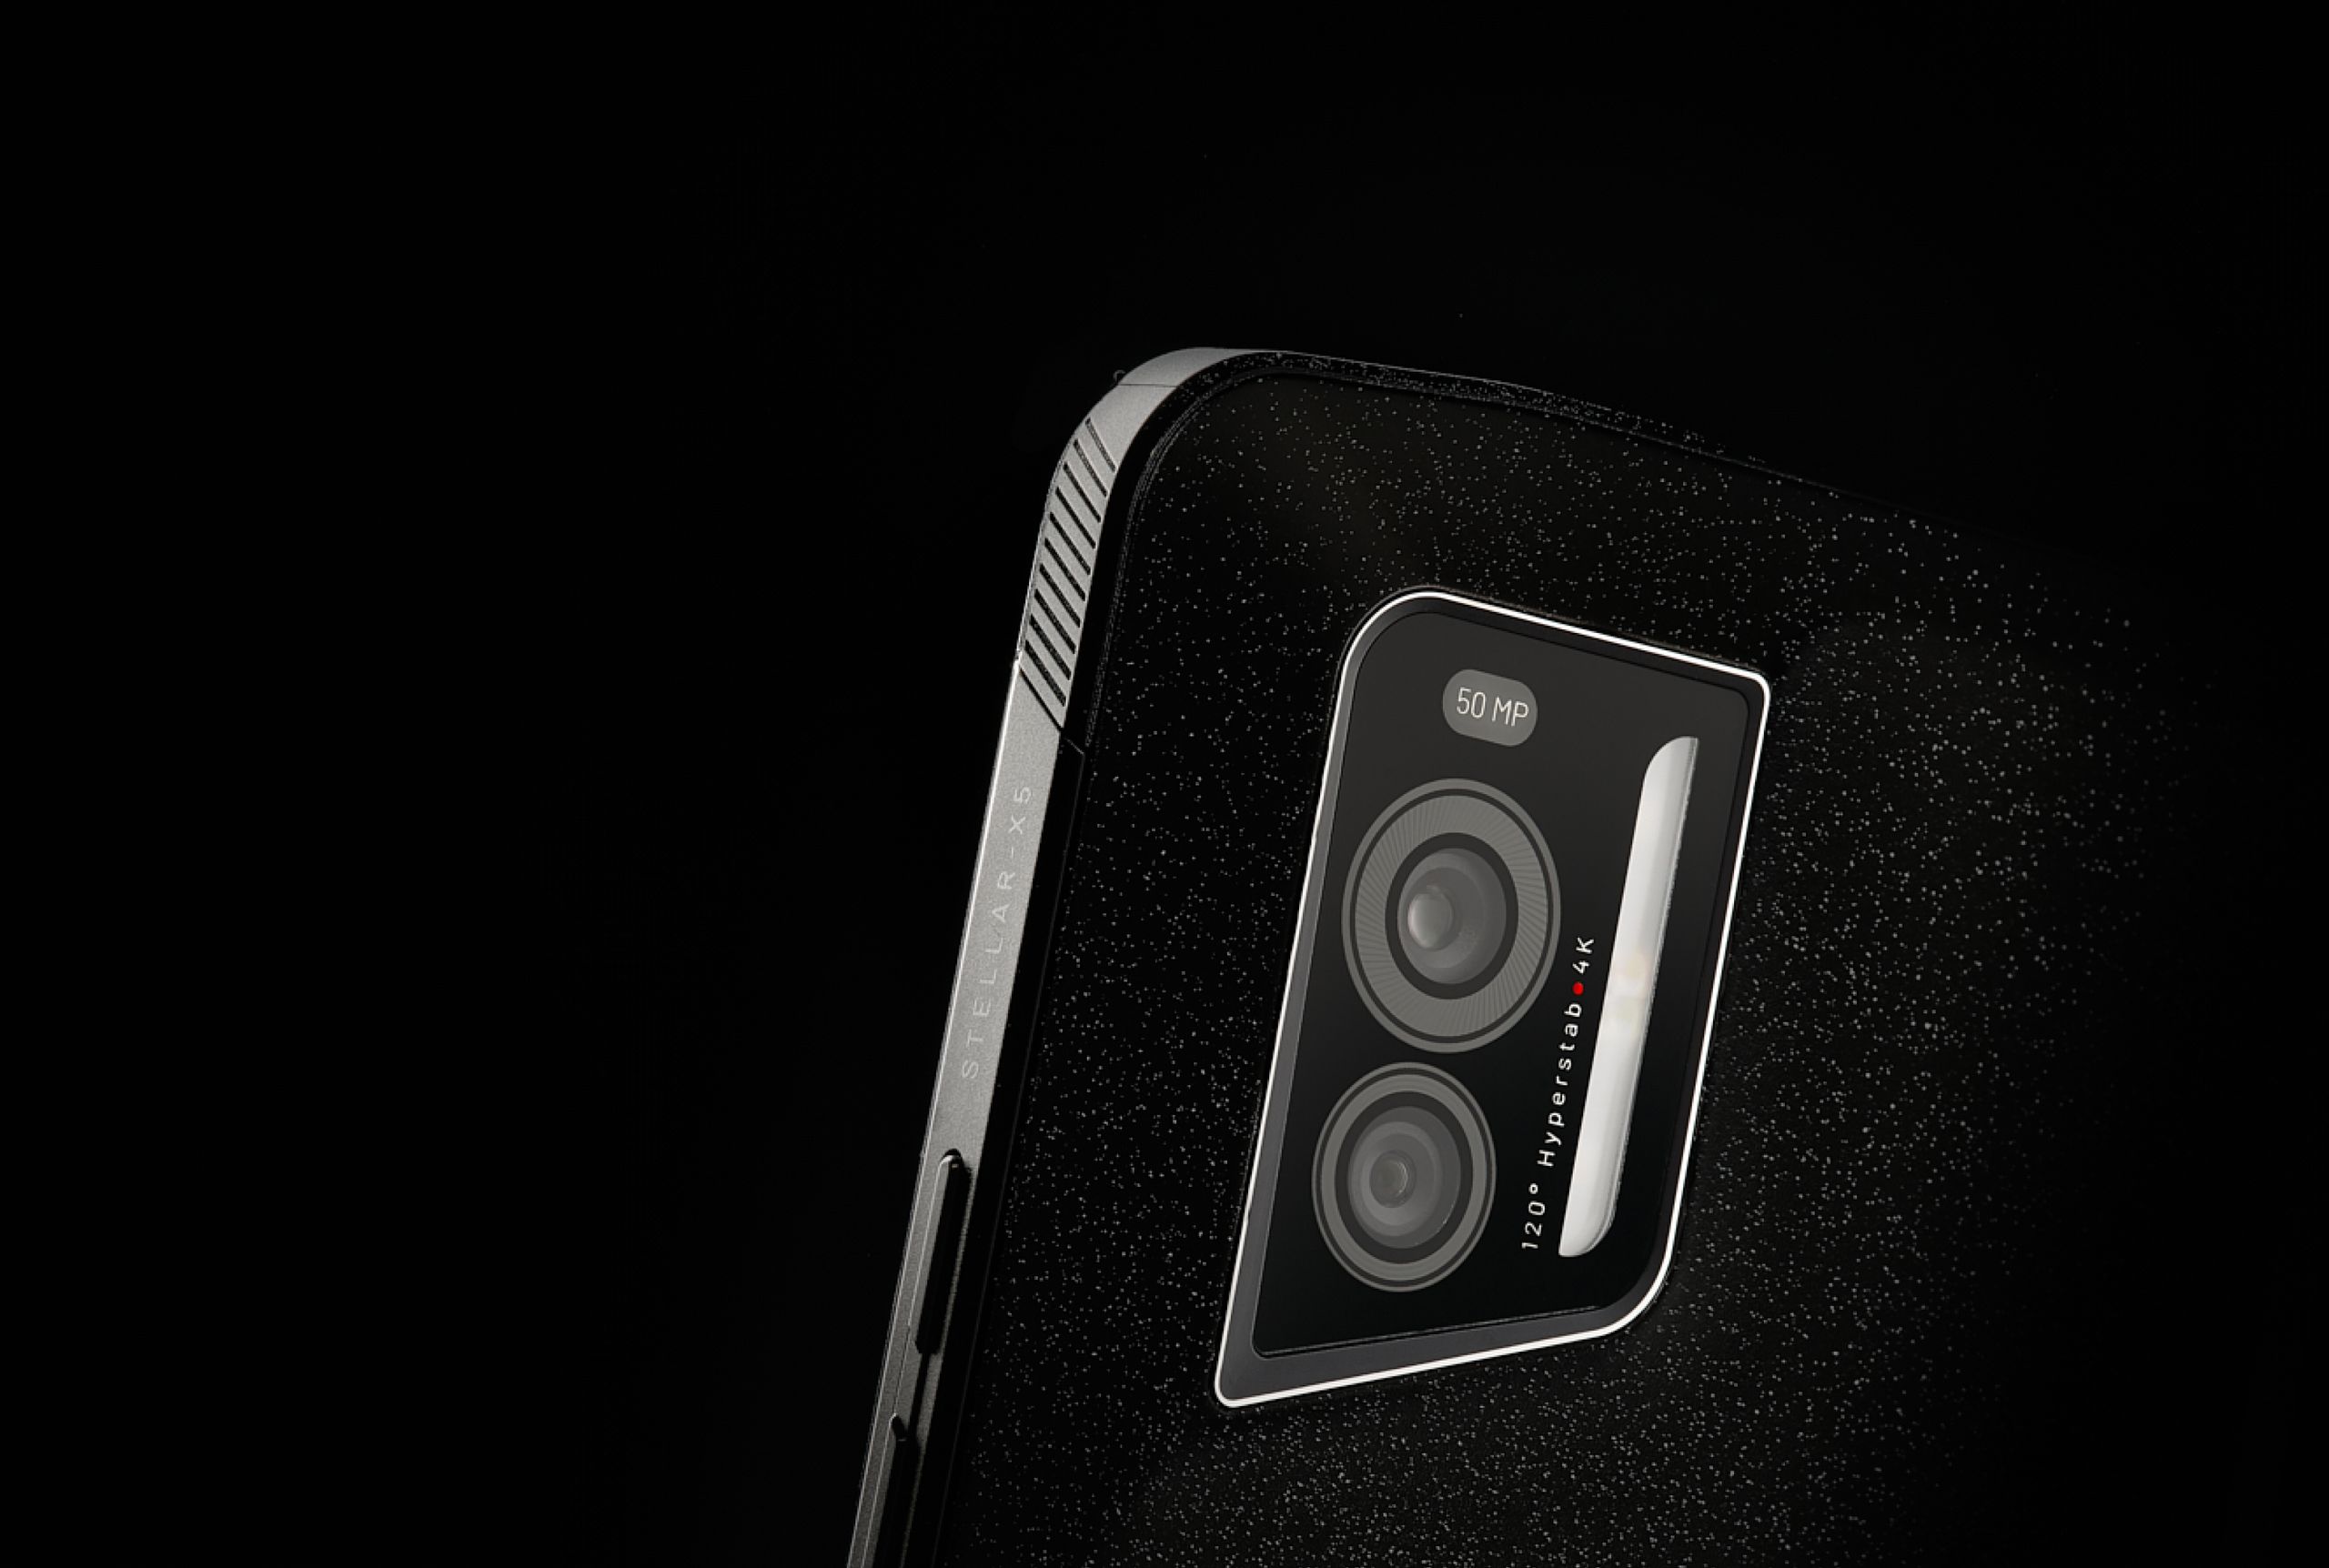 Crosscall X-5 phone fullscreen image on a black background